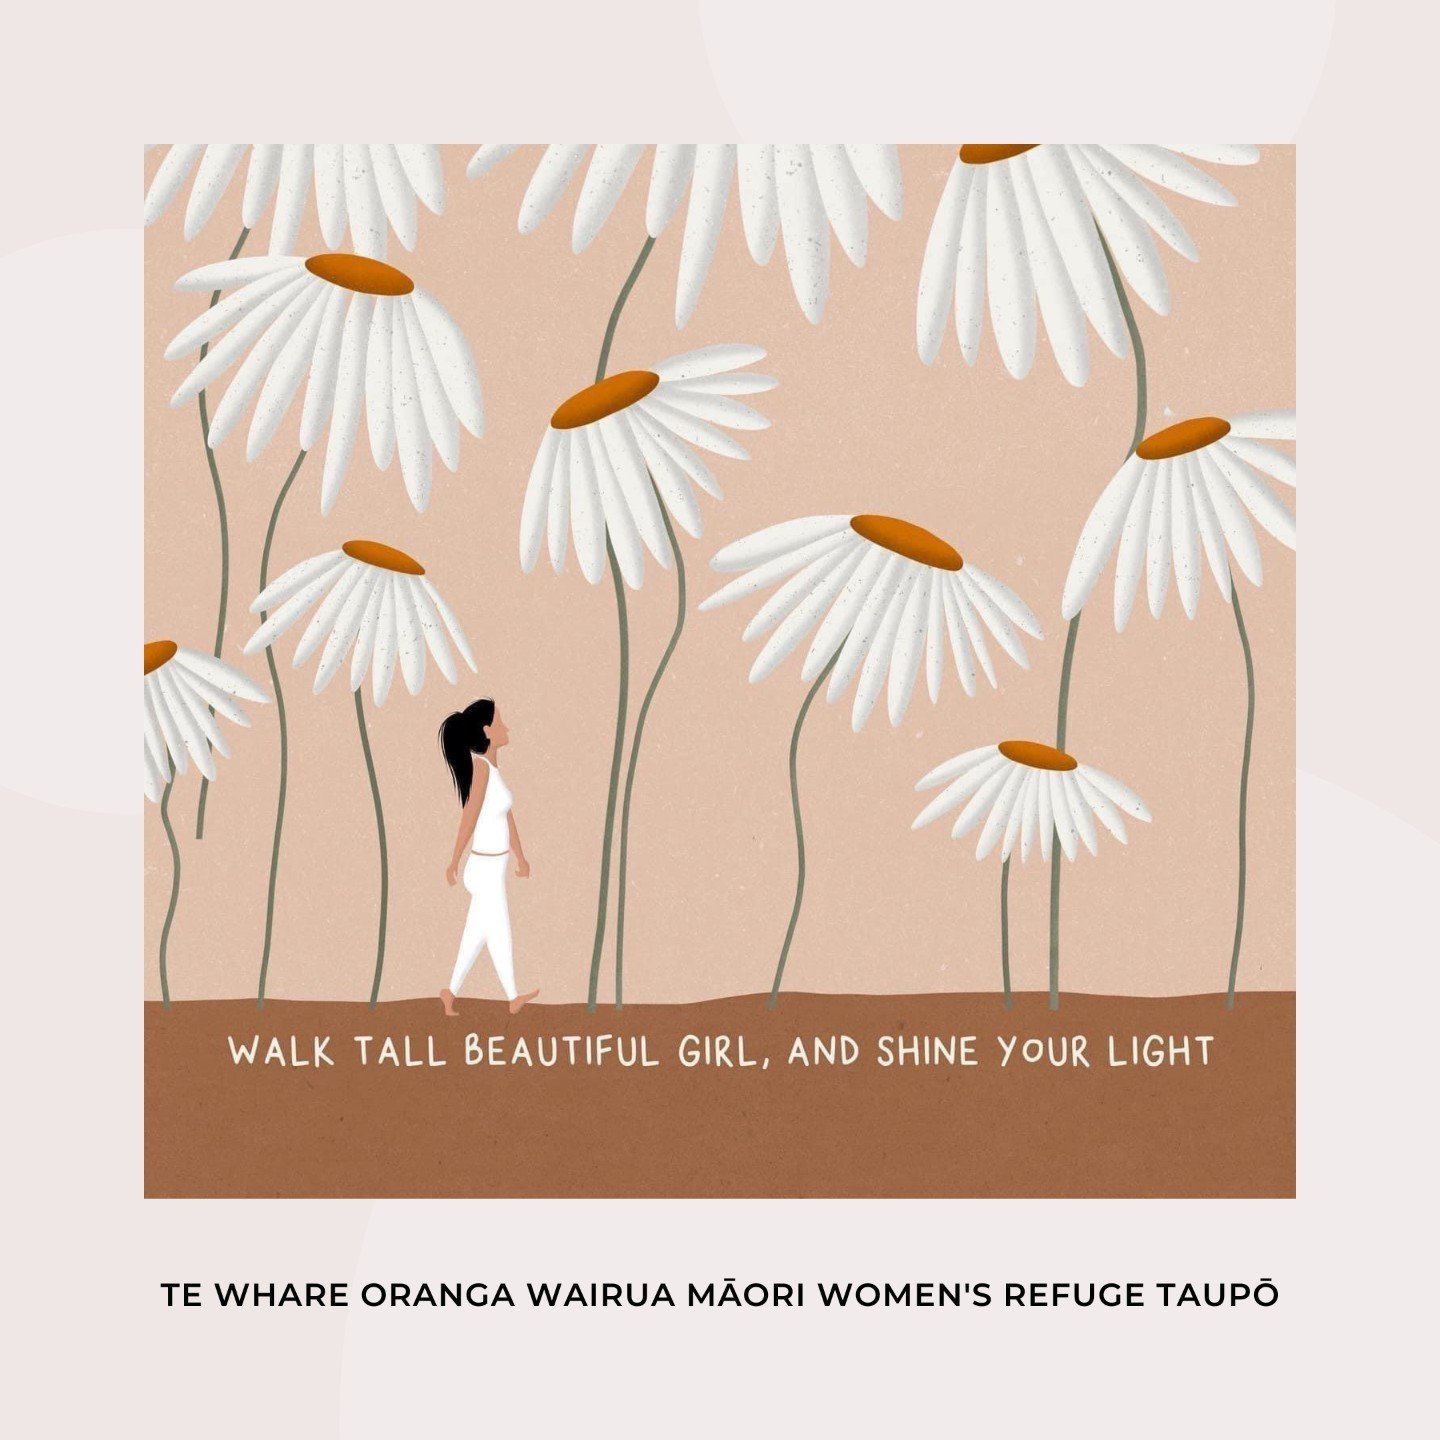 'Walk tall beautiful girl, and shine your light' 

www.twowrefuge.org.nz